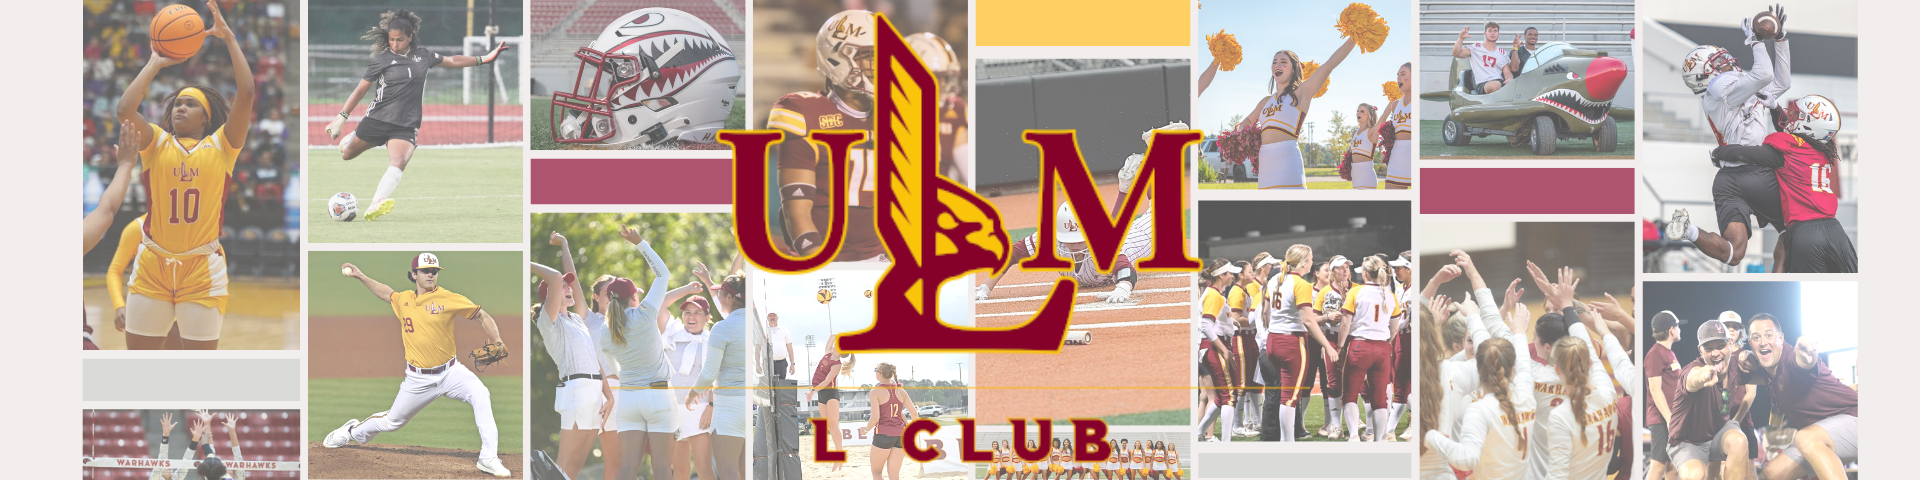 L-Club webpage banner